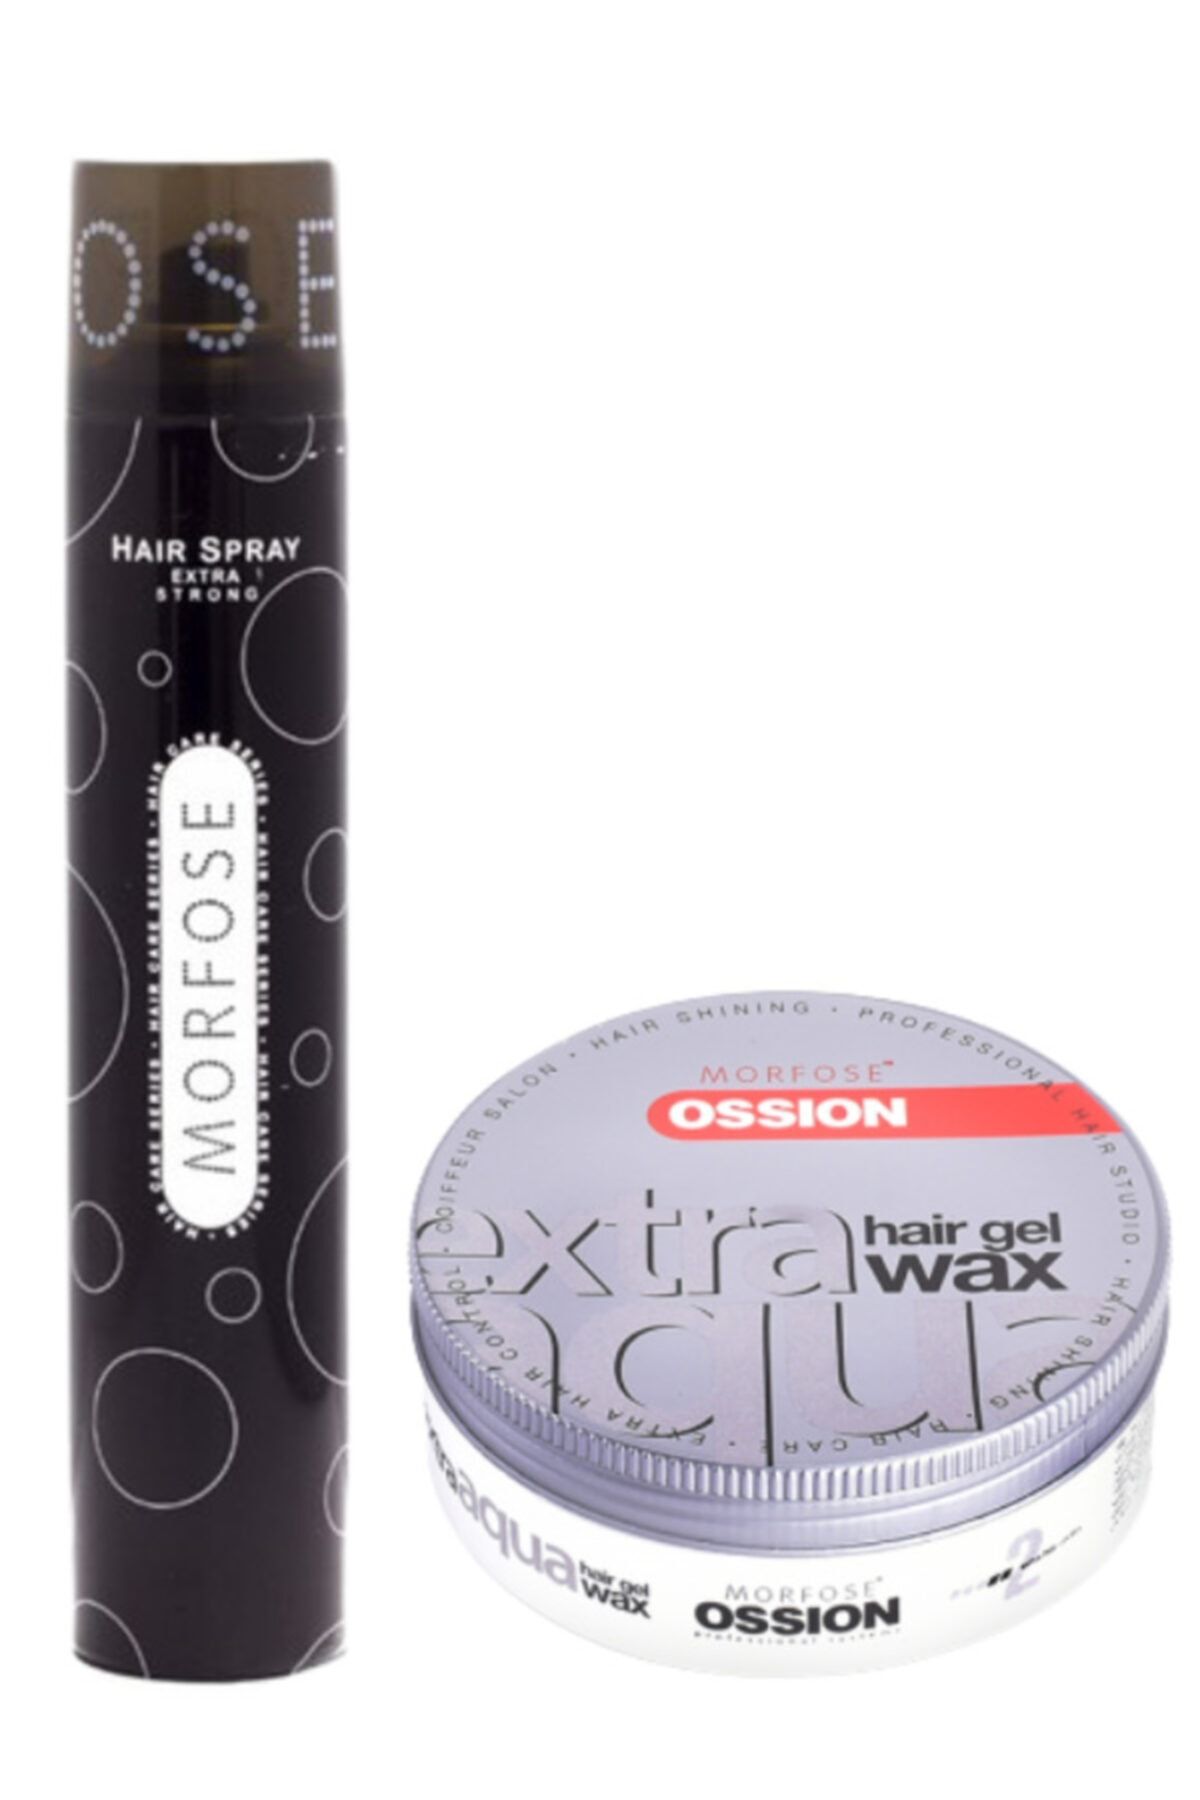 Morfose Saç Spreyi Siyah 400 ml + Ossion Extra Aqua Gel Wax 2 Extra Hair  150 ml